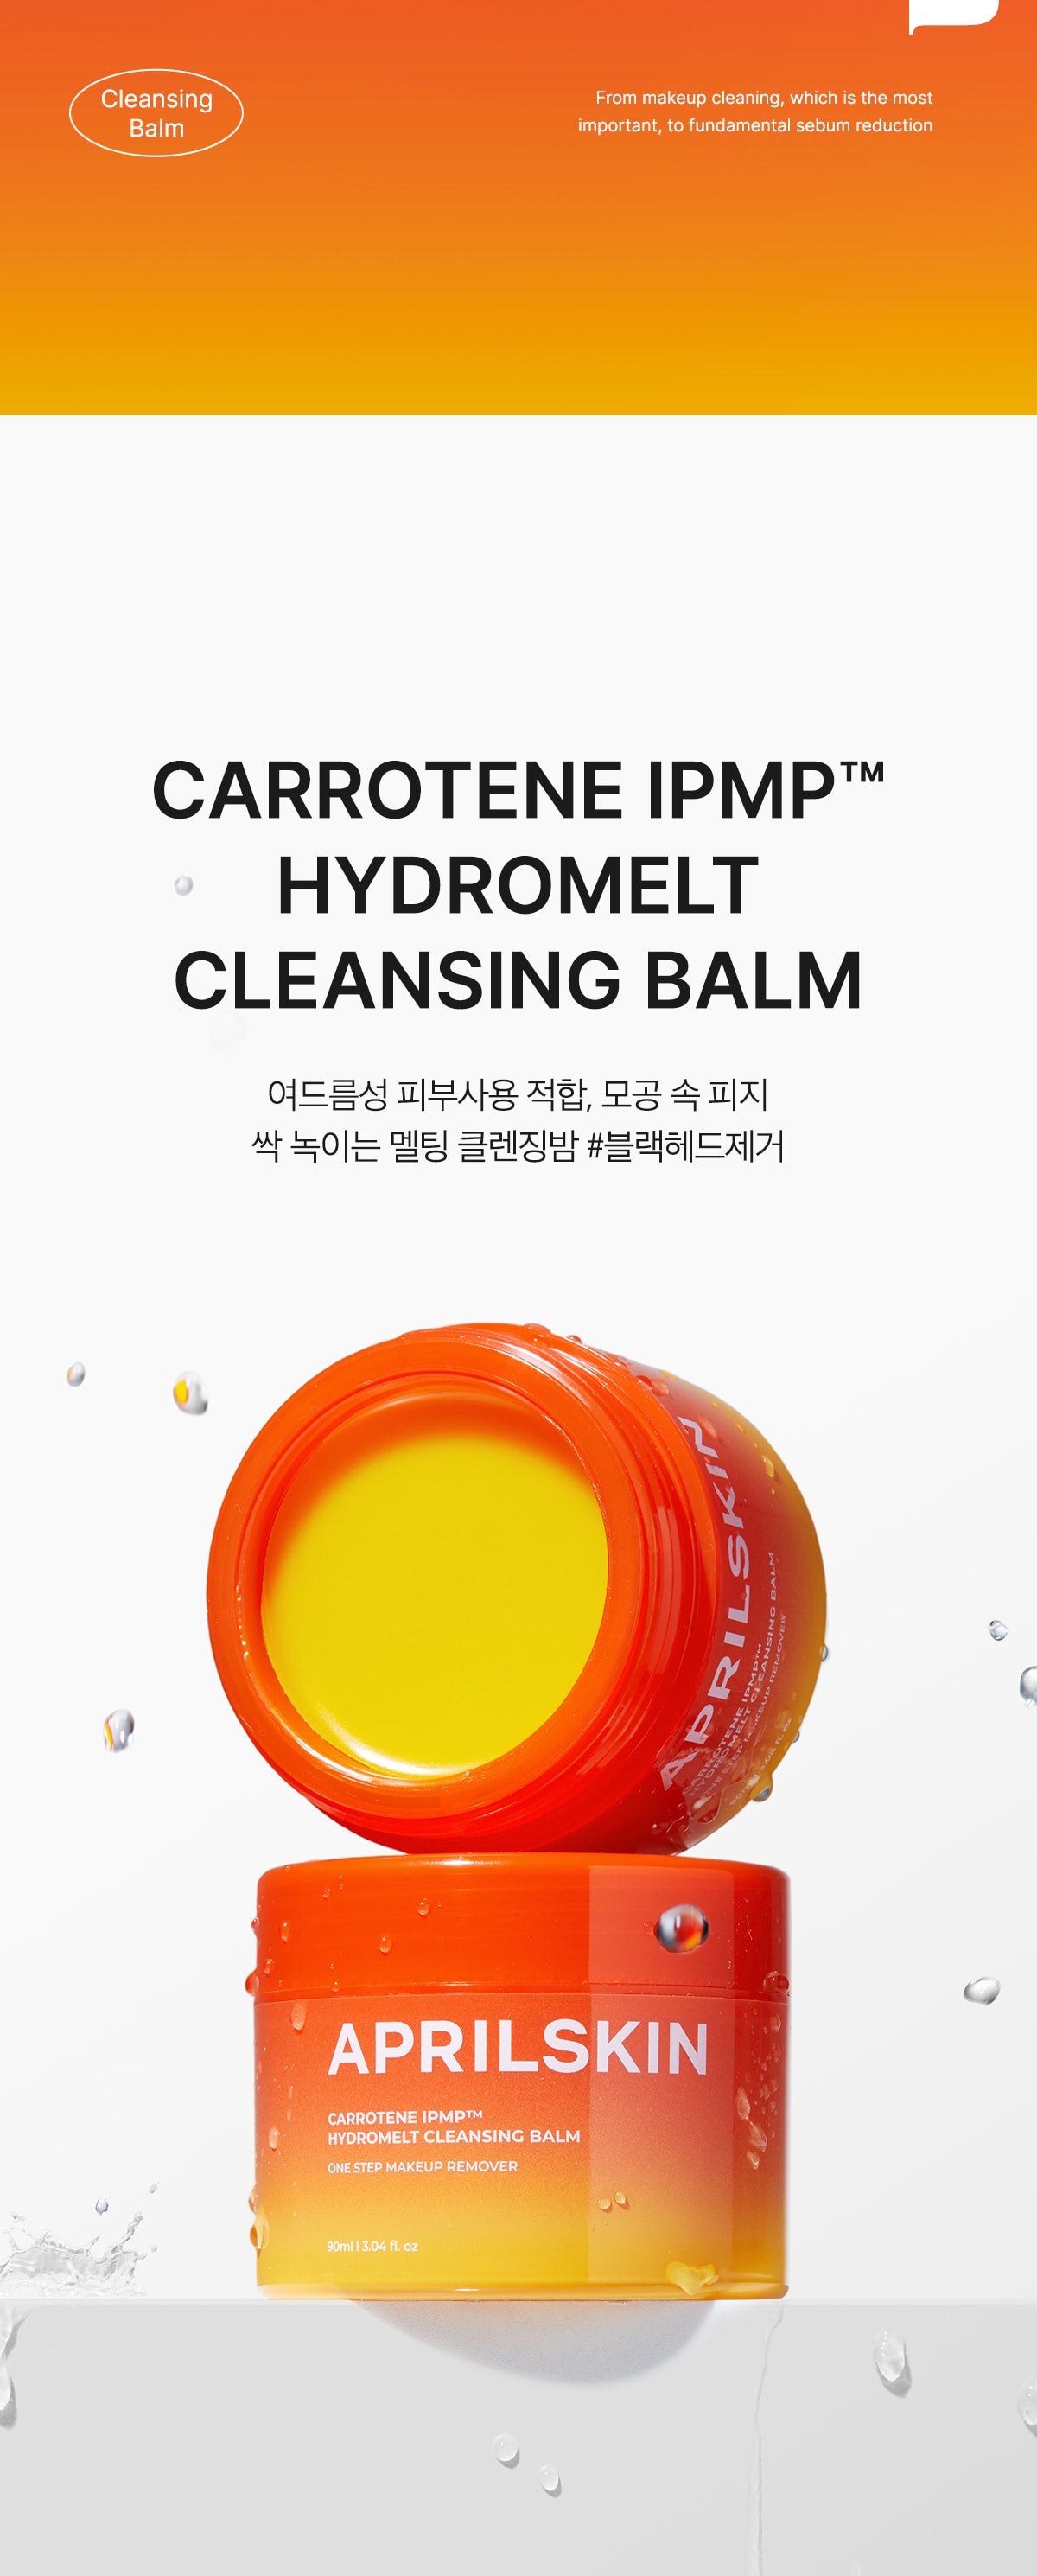 Aprilskin_Carrotene IPMP Hydromelt Cleansing Balm 90ml_1